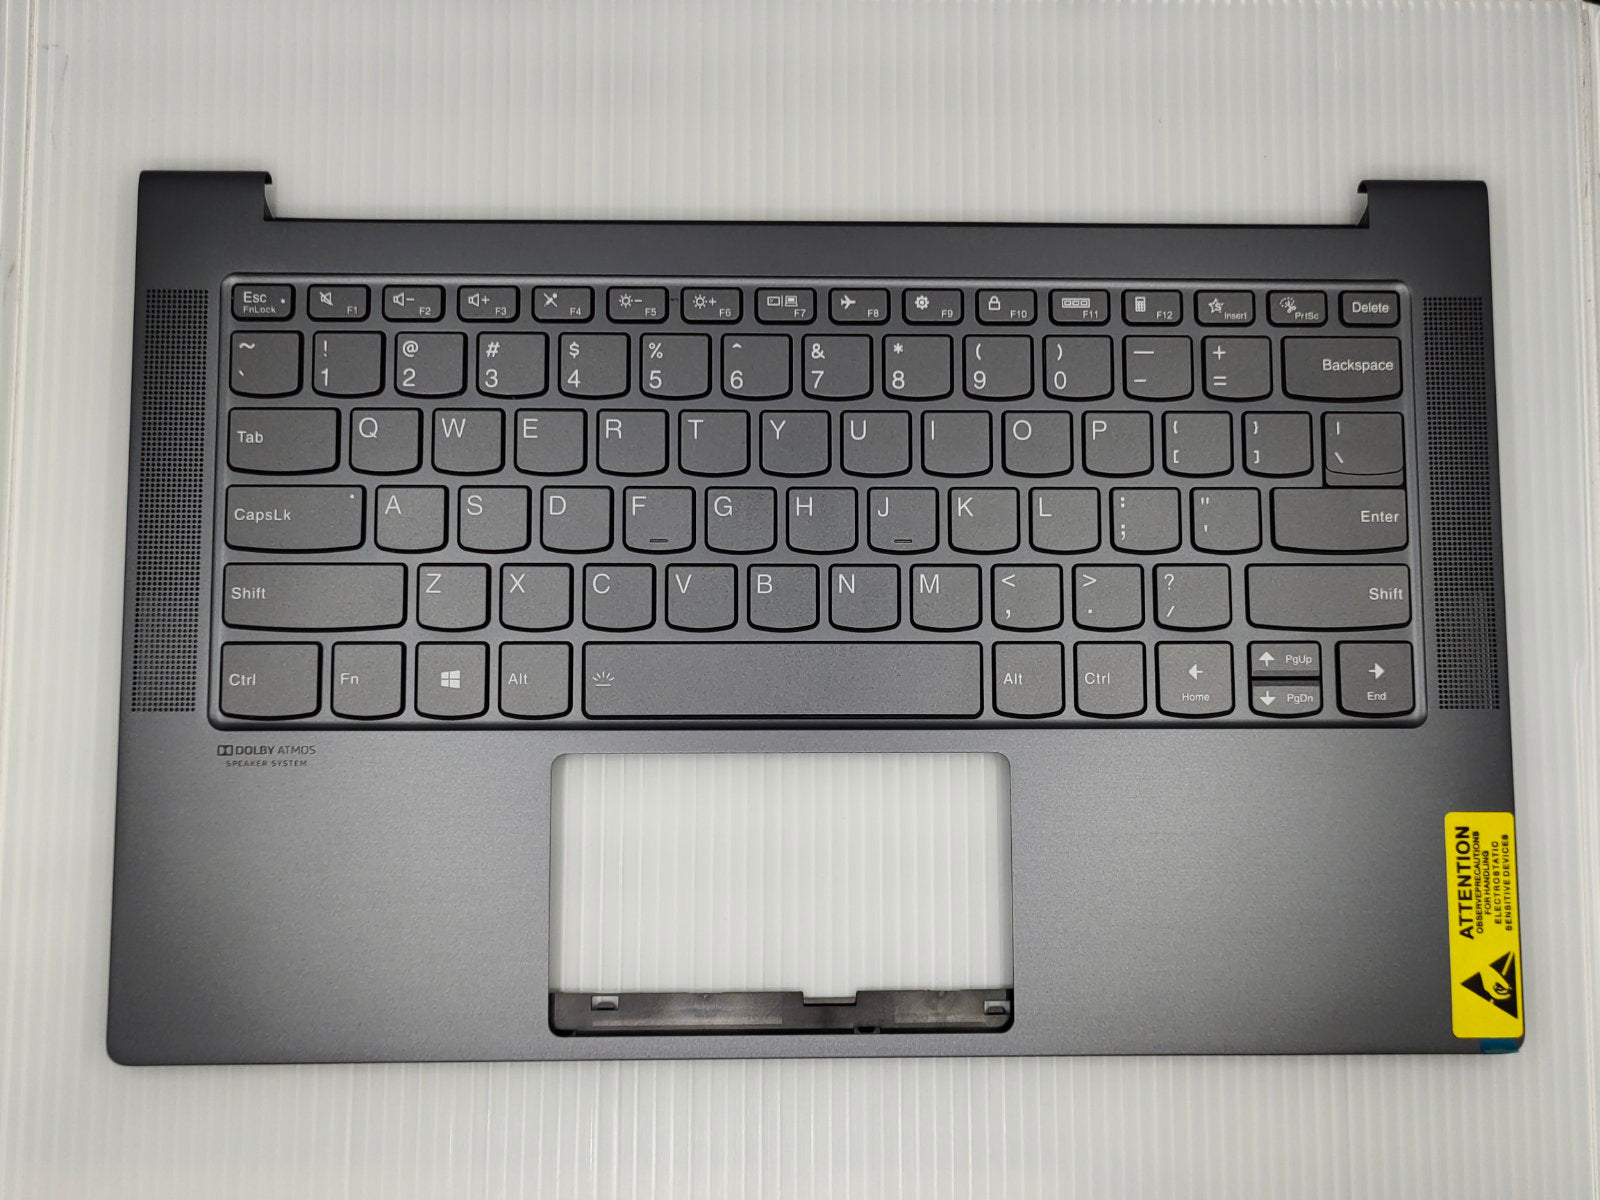 Replacement Keyboard Module for Lenovo Yoga Slim 7-141TL05 WL